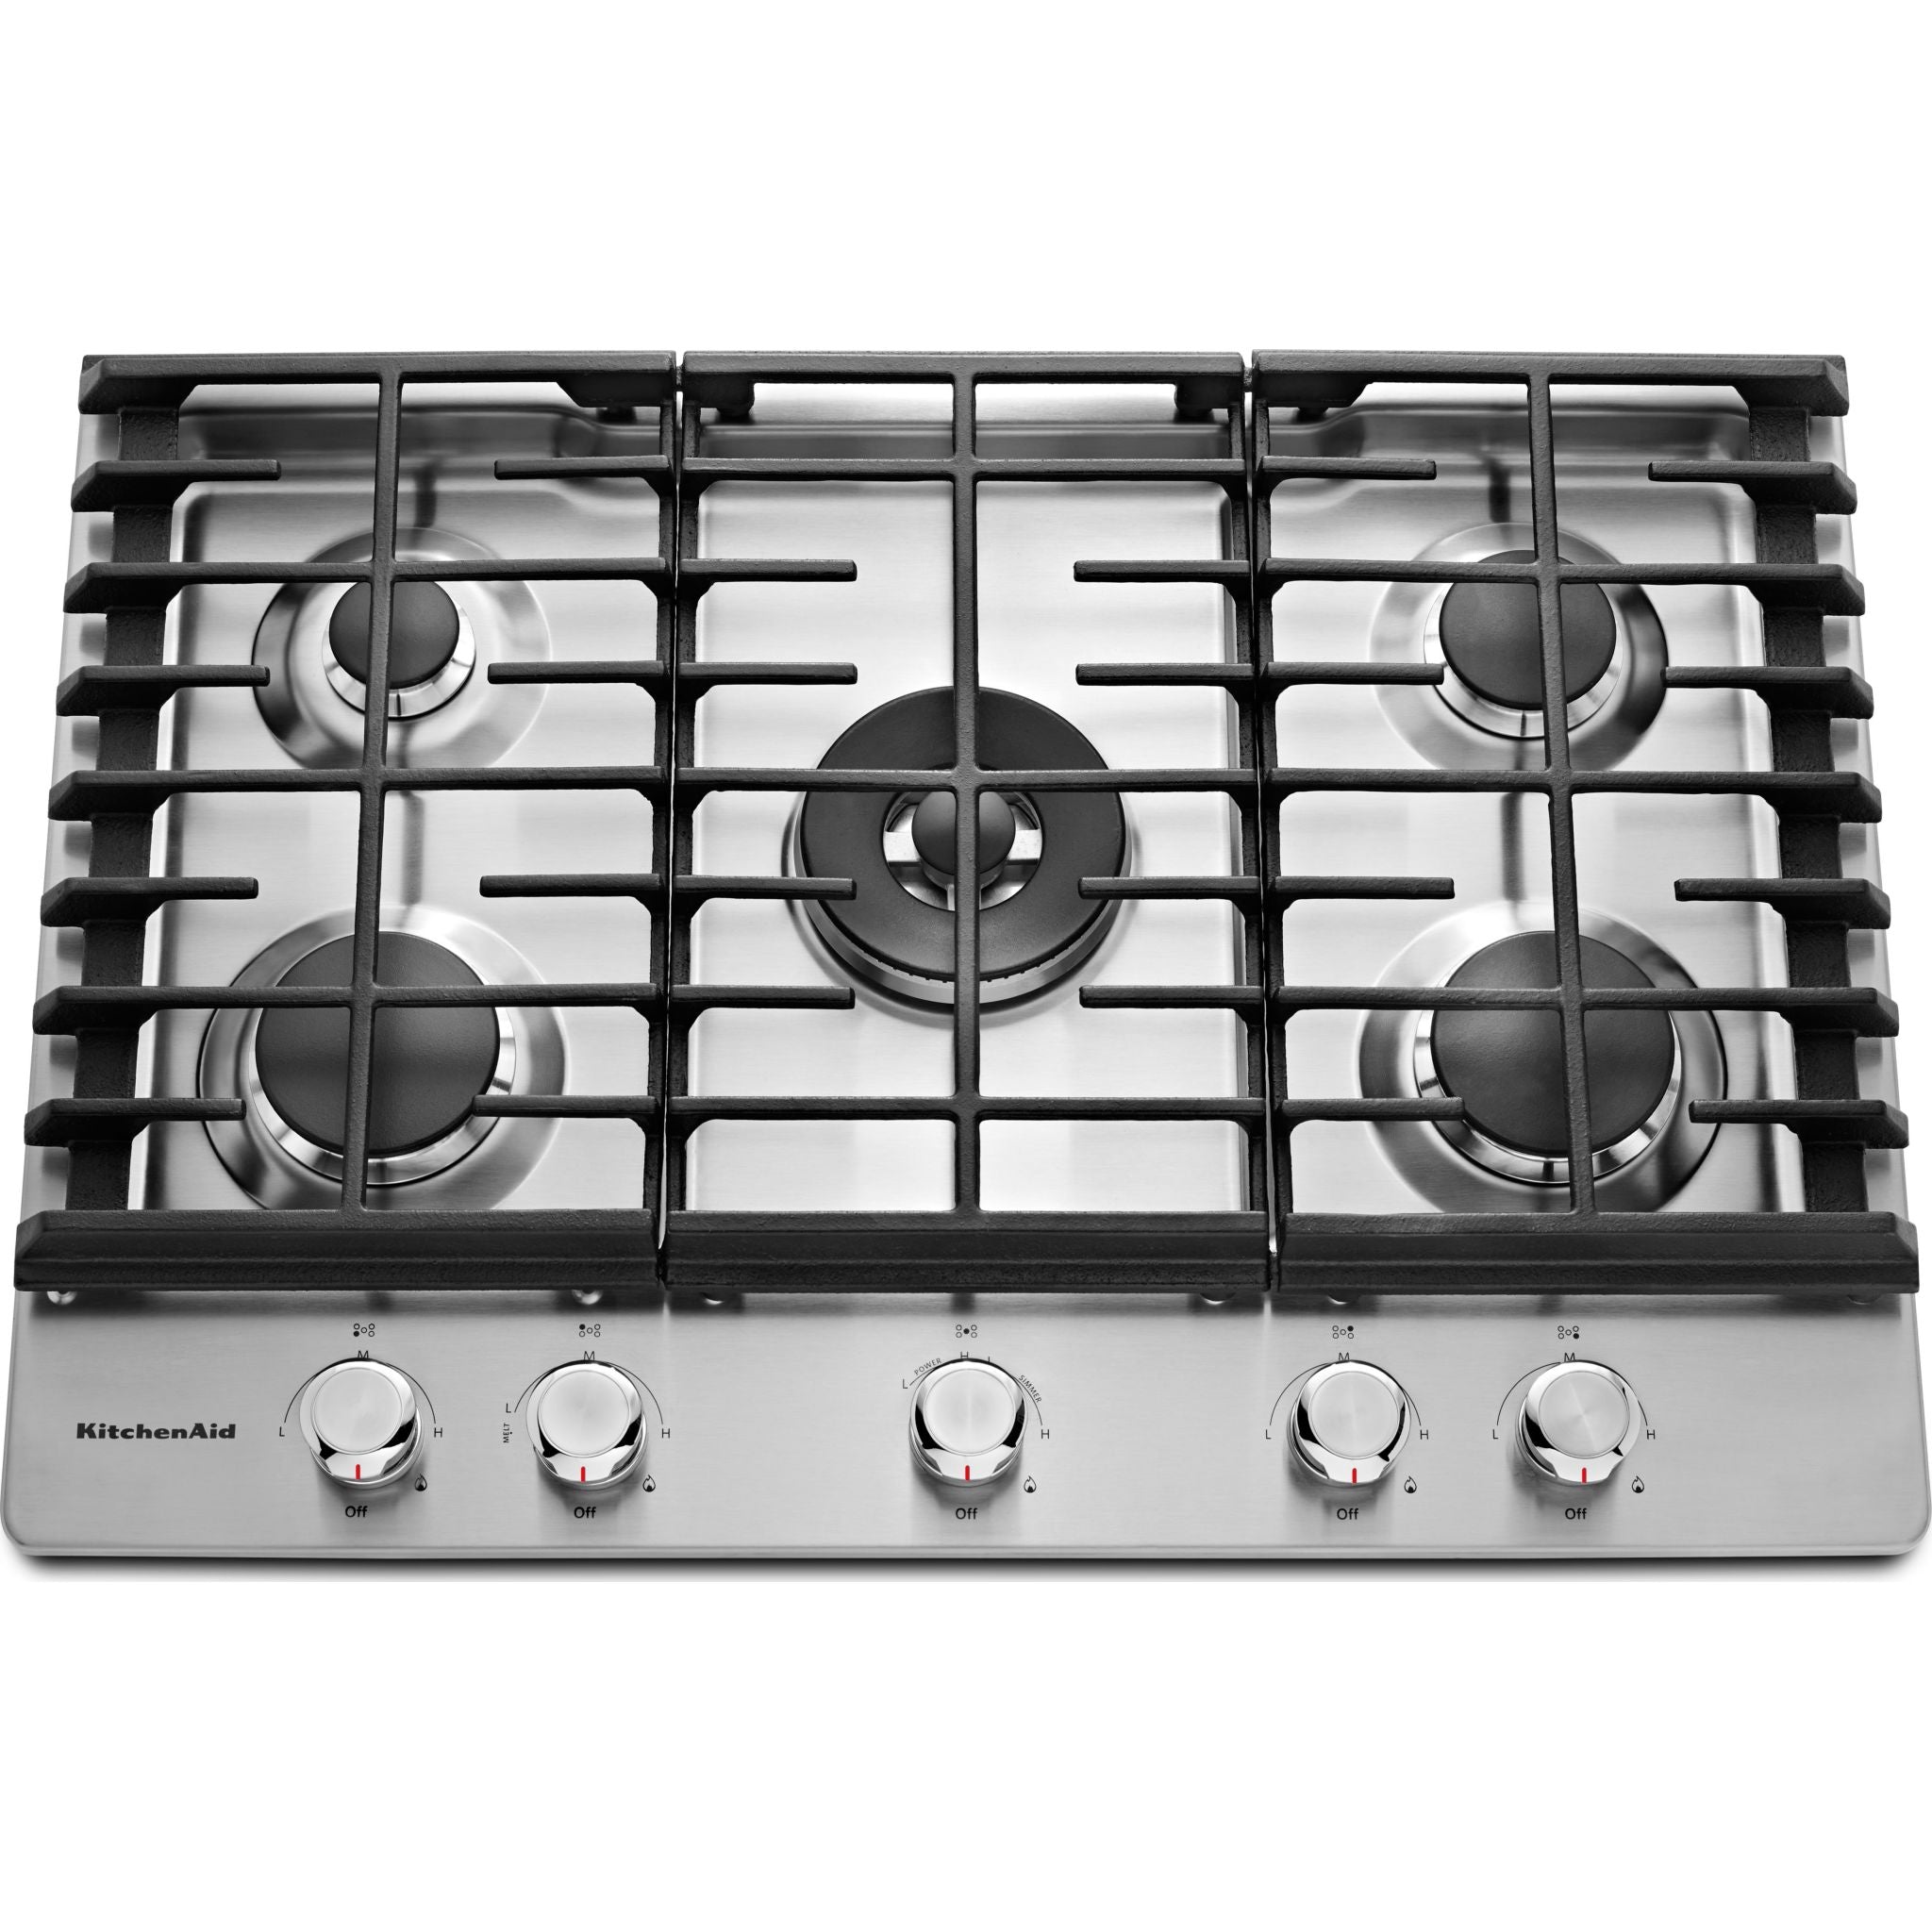 KitchenAid, KitchenAid 30" Gas Cooktop (KCGS550ESS) - Stainless Steel